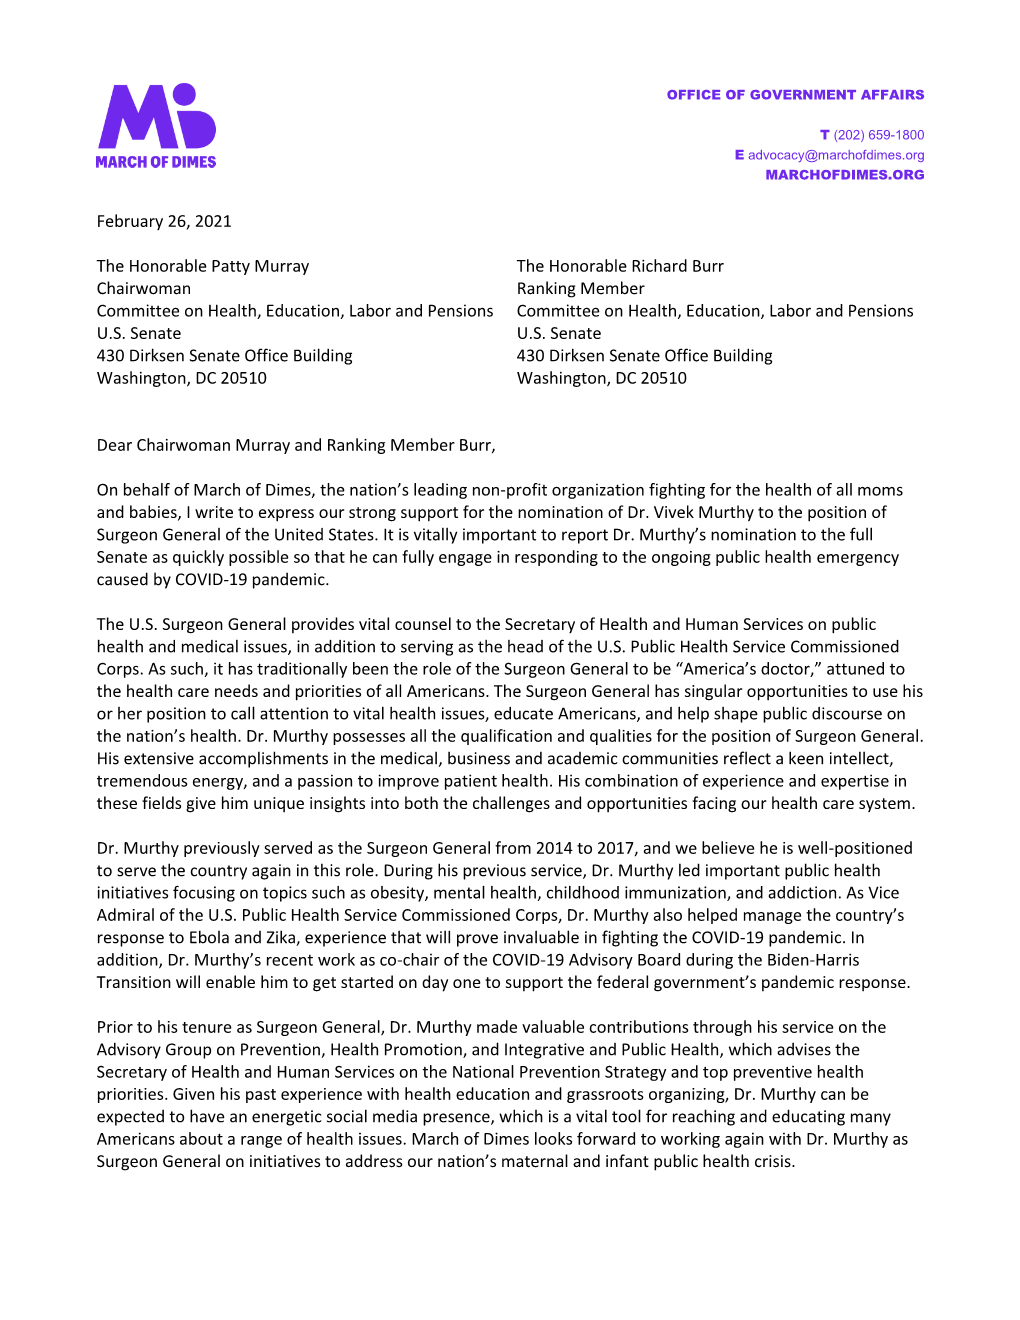 Letter of Support of Dr. Vivek Murthy USSG Nomination, Feb. 26, 2021